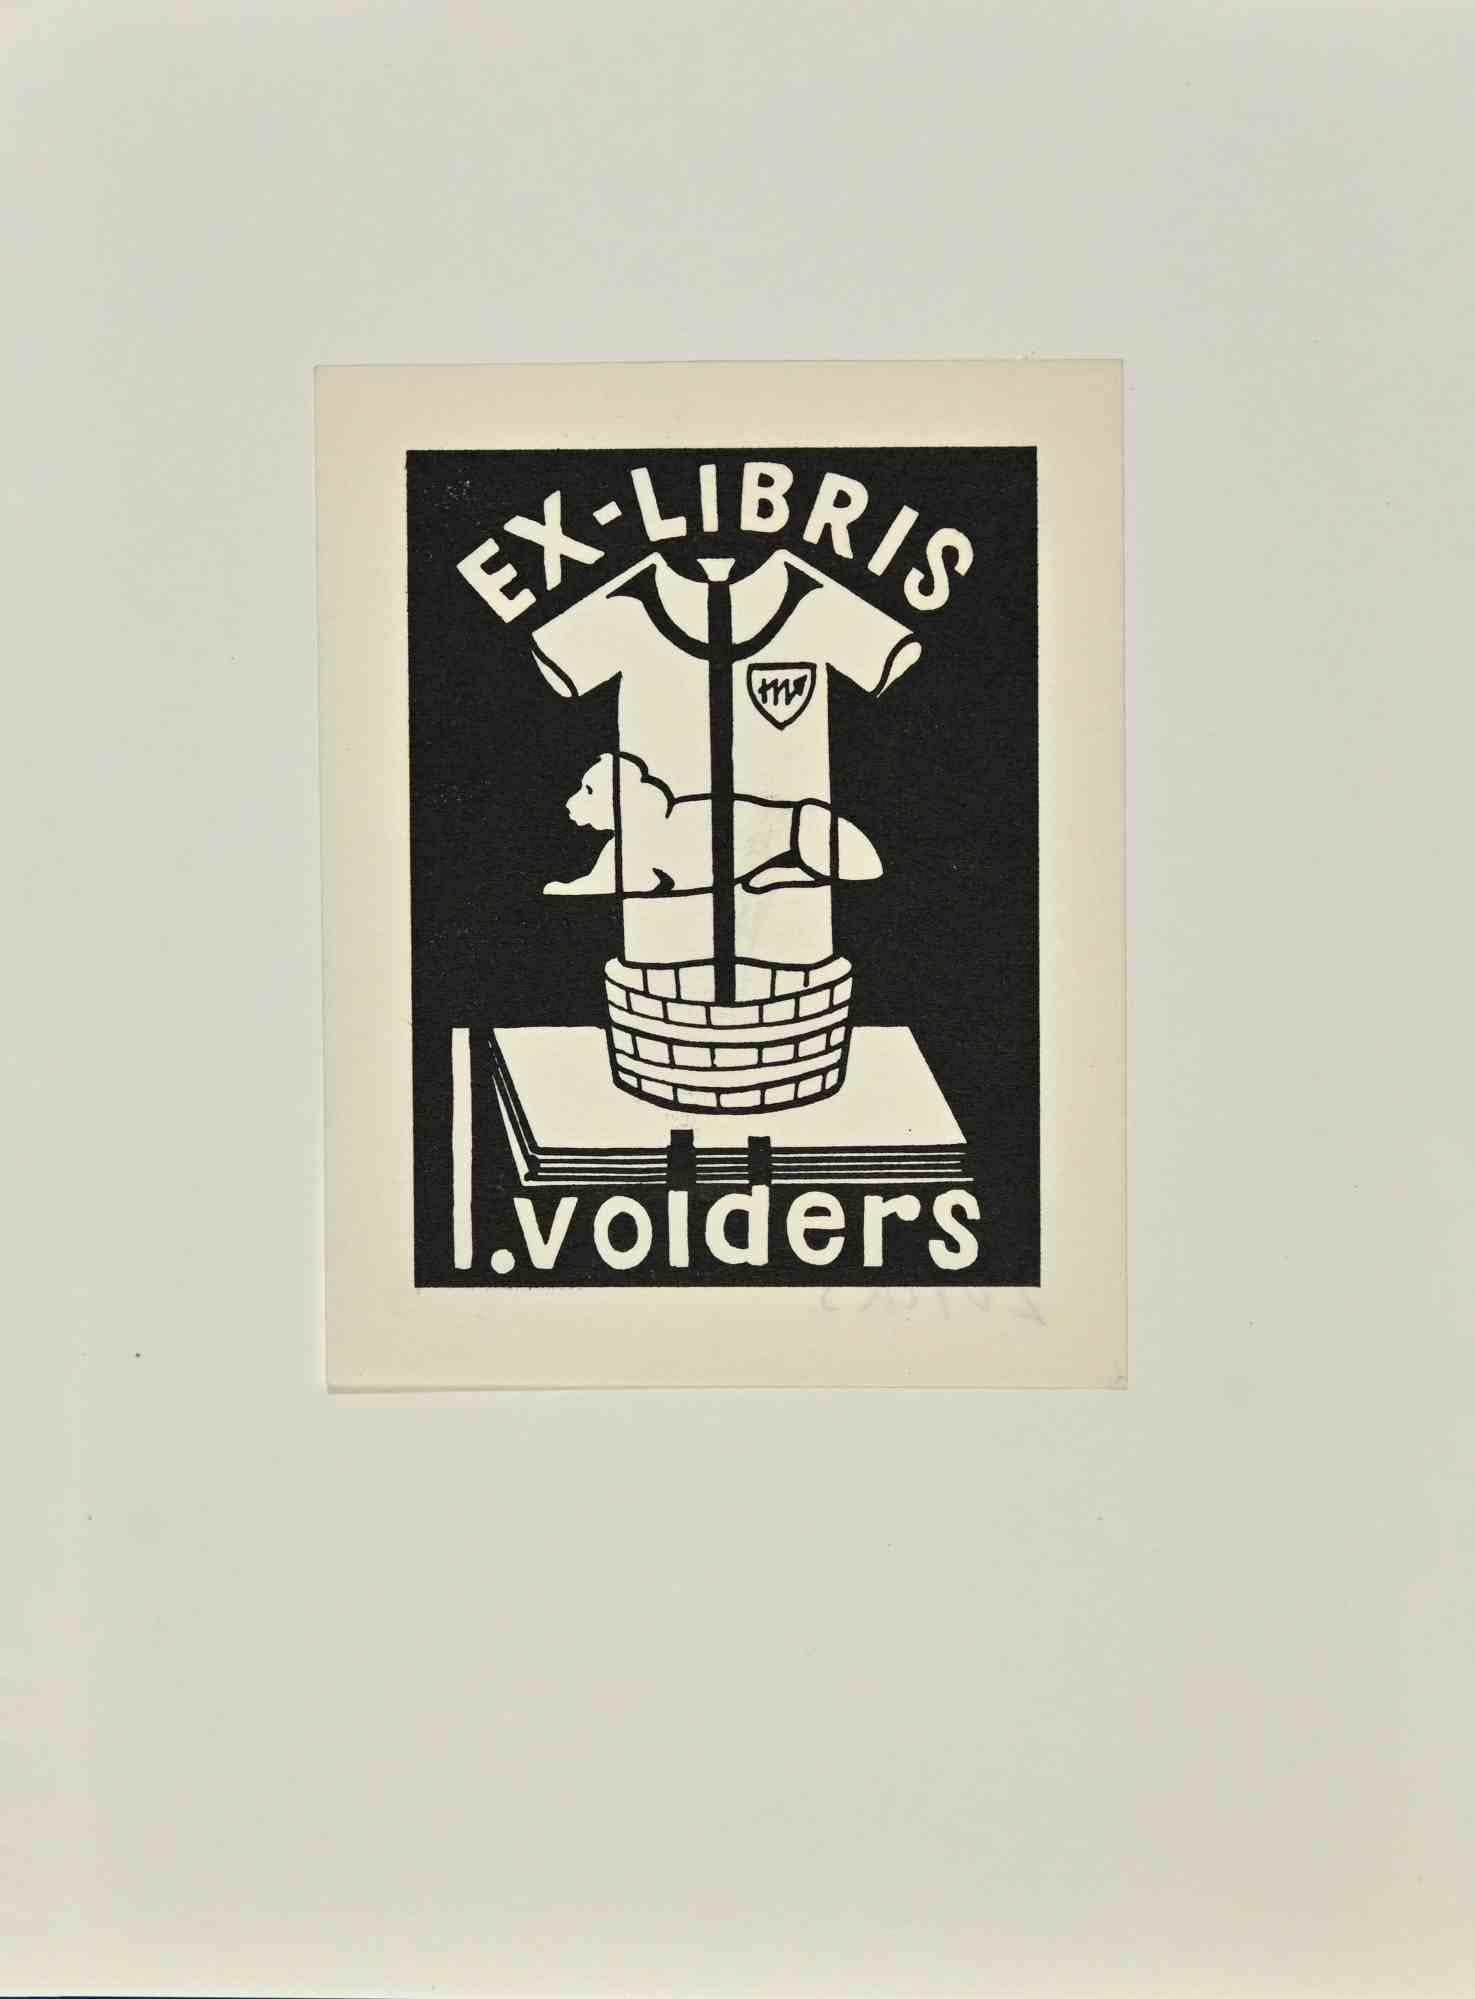 Unknown Figurative Print - Ex Libris -I. Volders - Woodcut - Mid-20th century